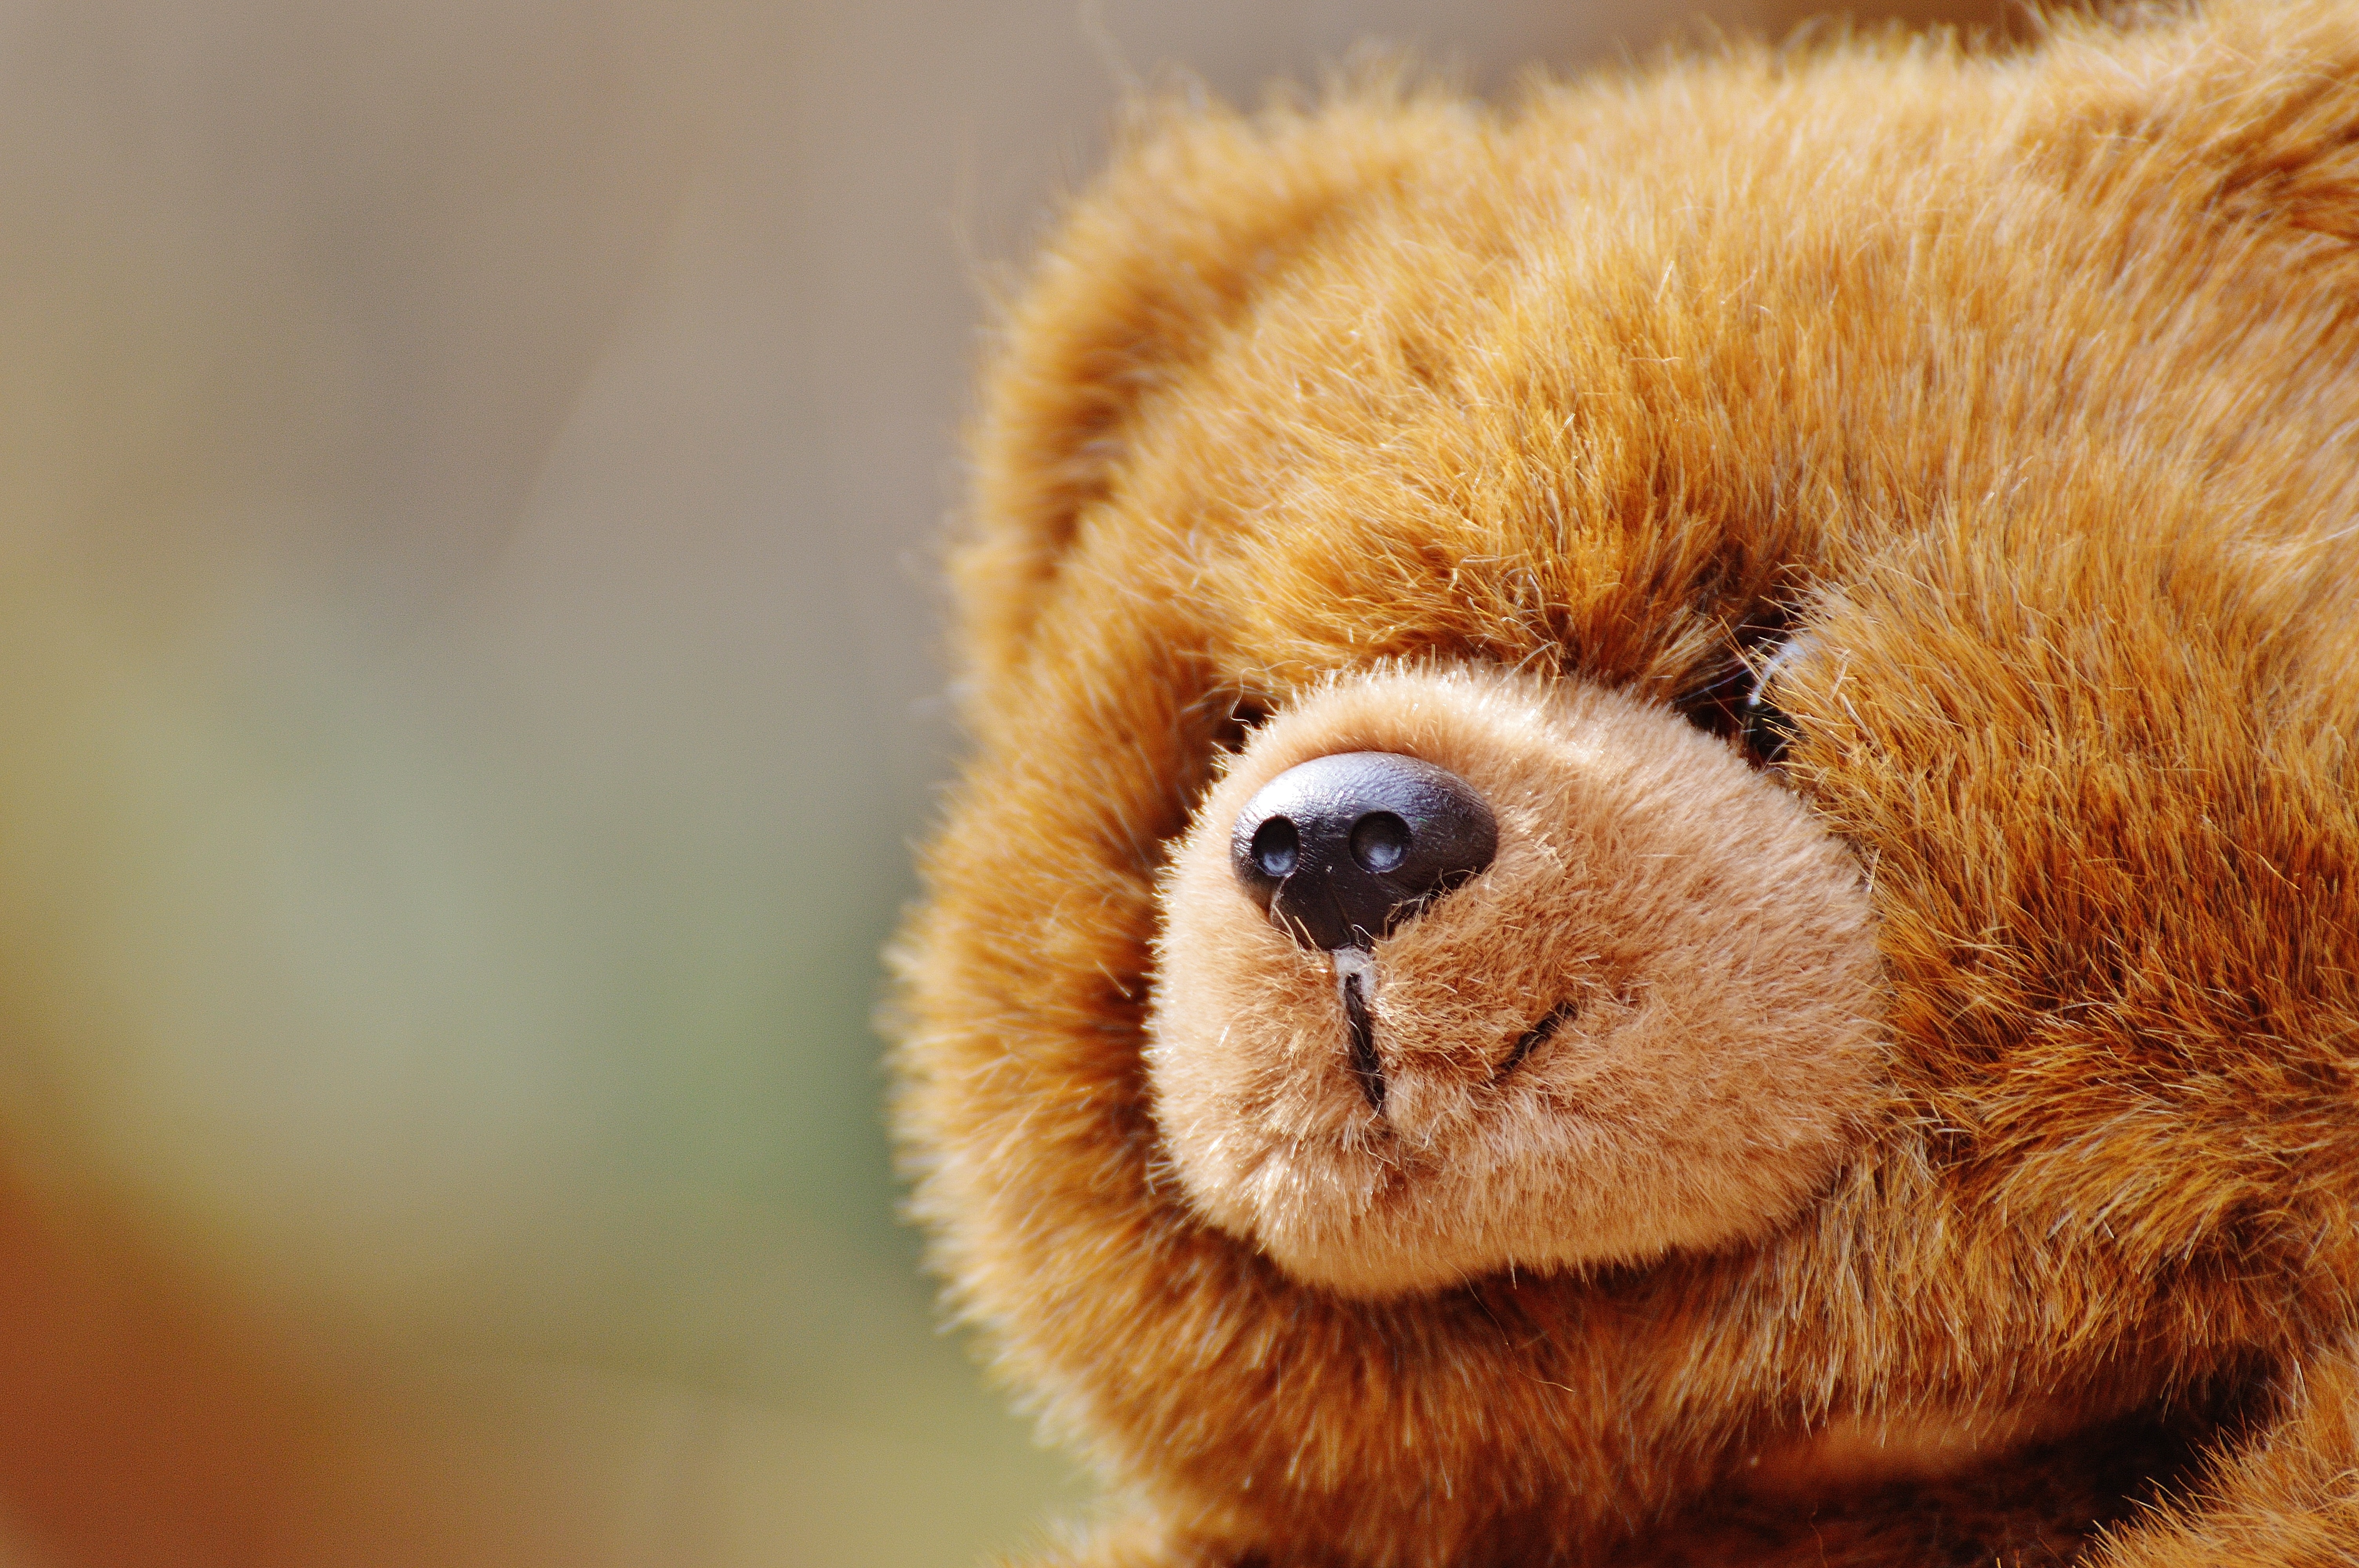 Bear, Teddy, Soft Toy, Stuffed Animal, one animal, close-up